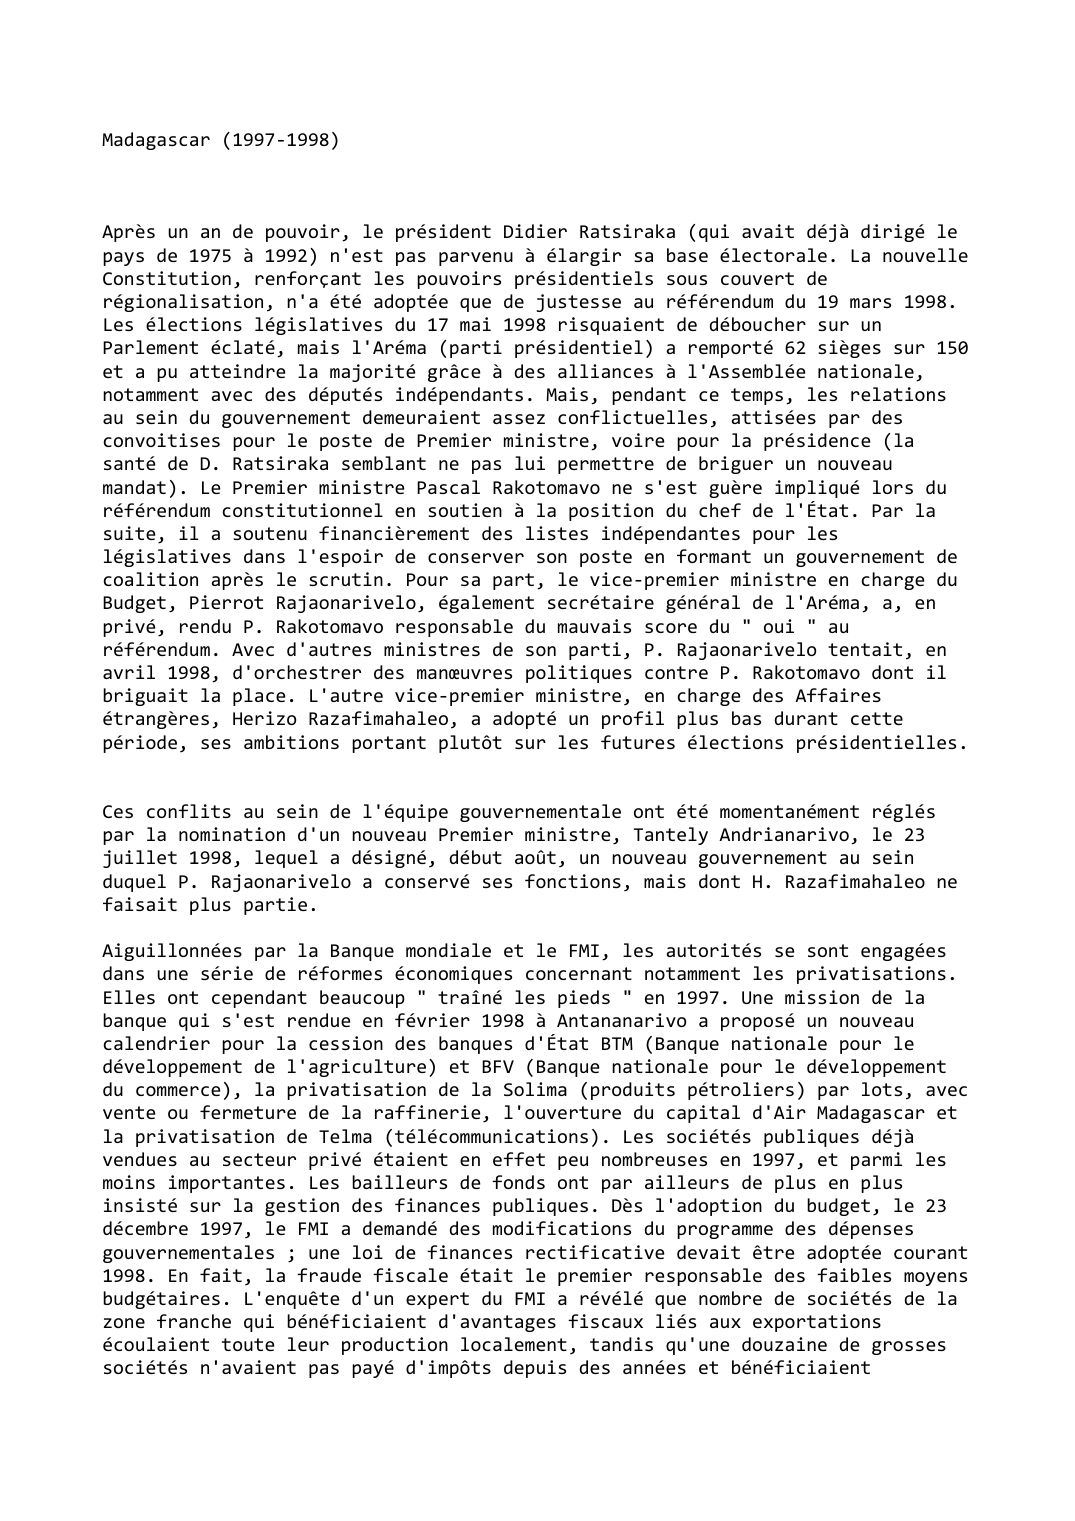 Prévisualisation du document Madagascar (1997-1998)